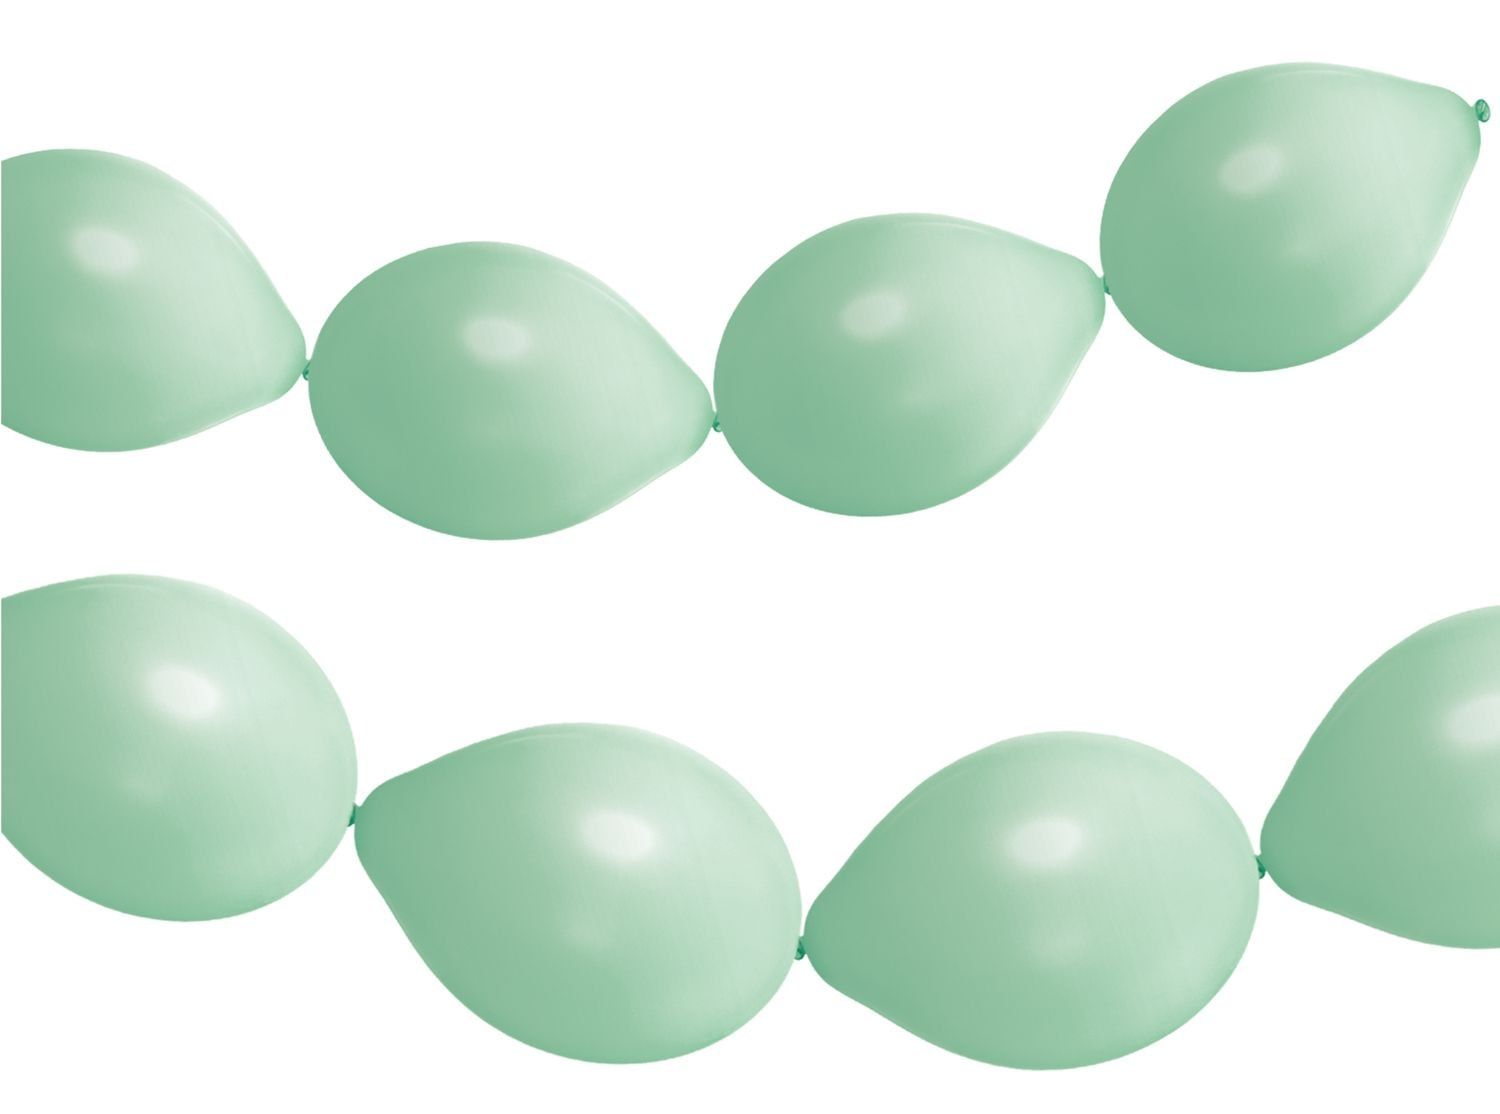 Pistache groene ballonnenslinger matte kleur